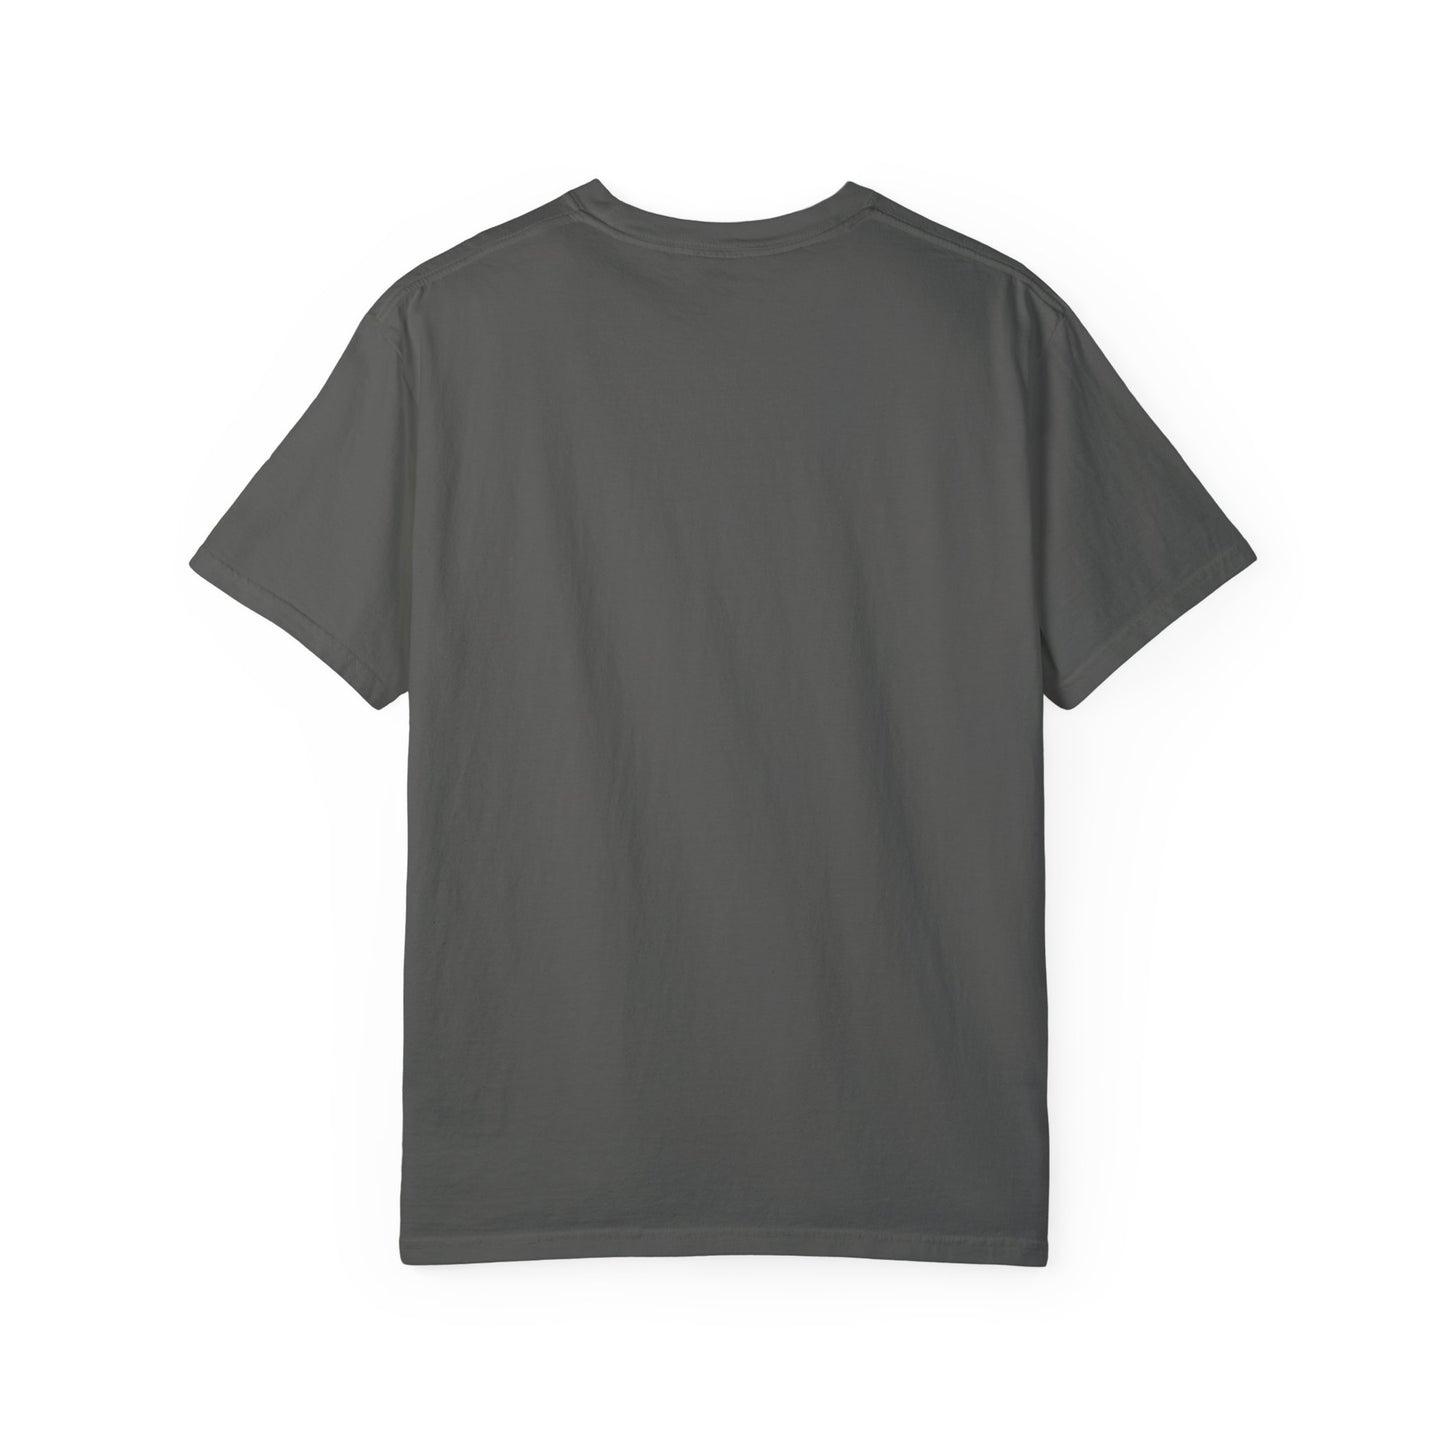 Unisex Garment-Dyed T-shirt - Black History T-shirt